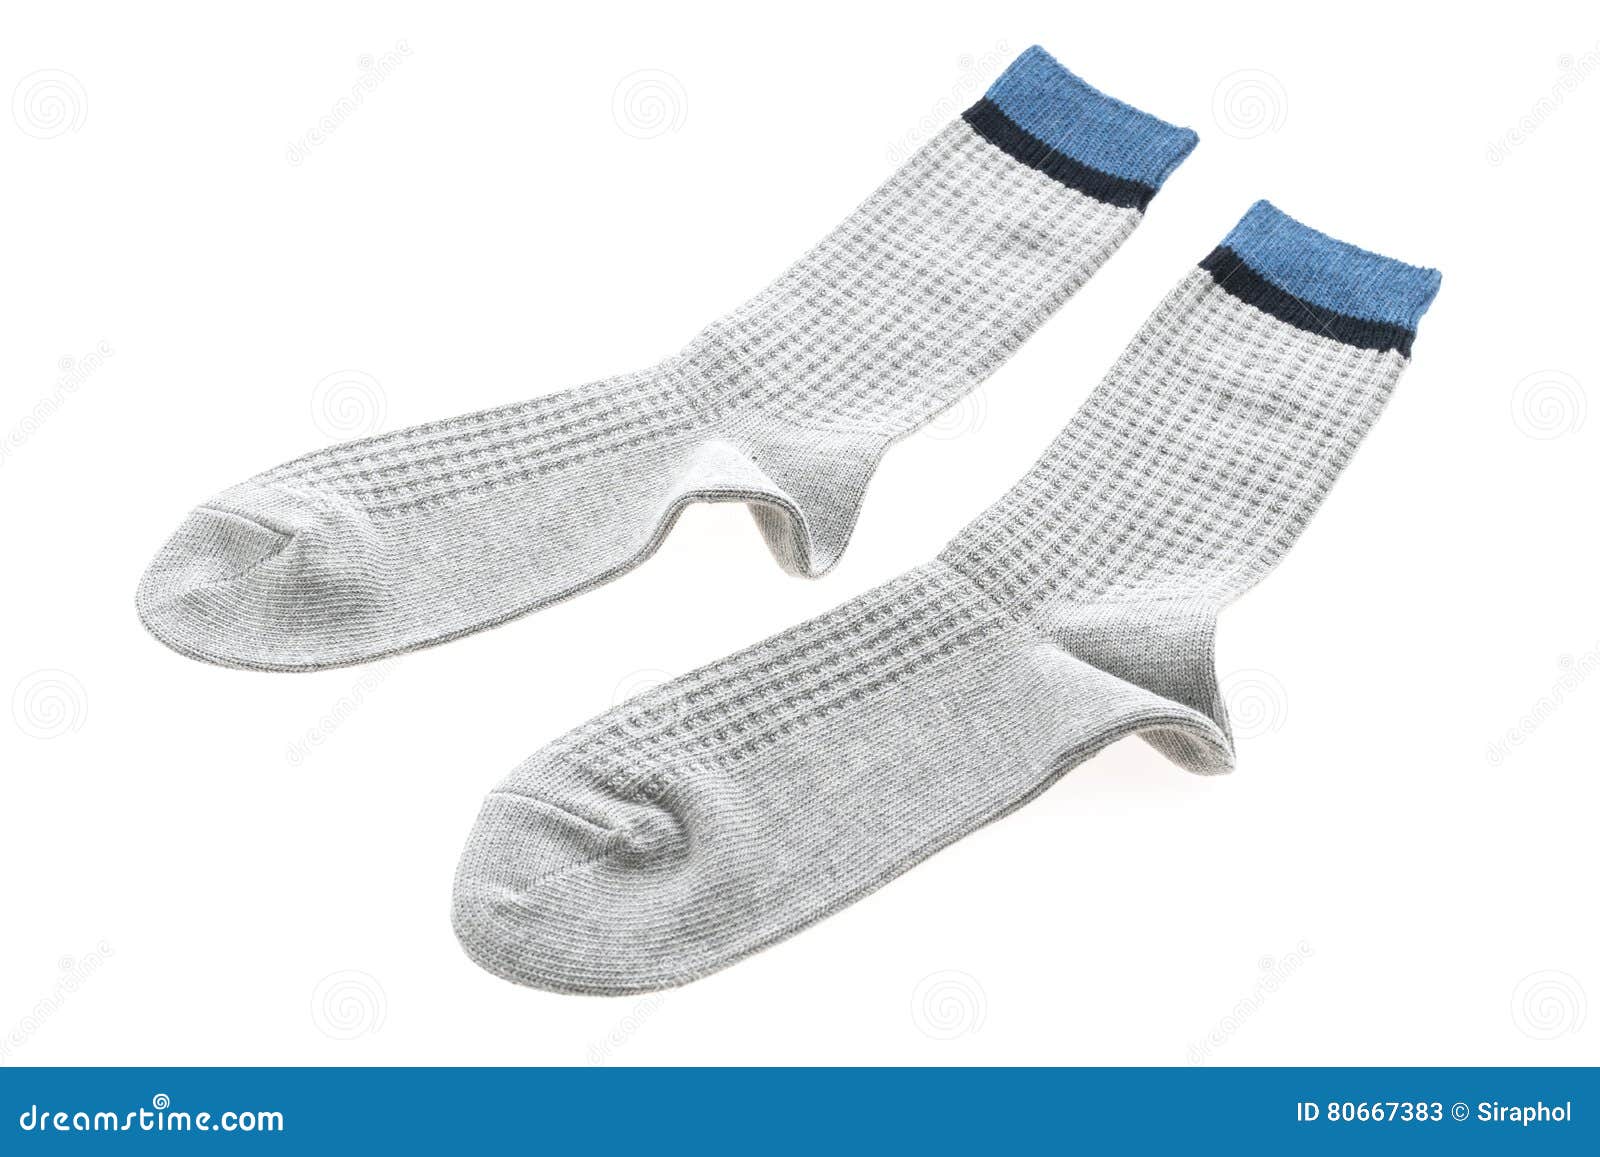 Sock isolated stock image. Image of socks, grey, pattern - 80667383